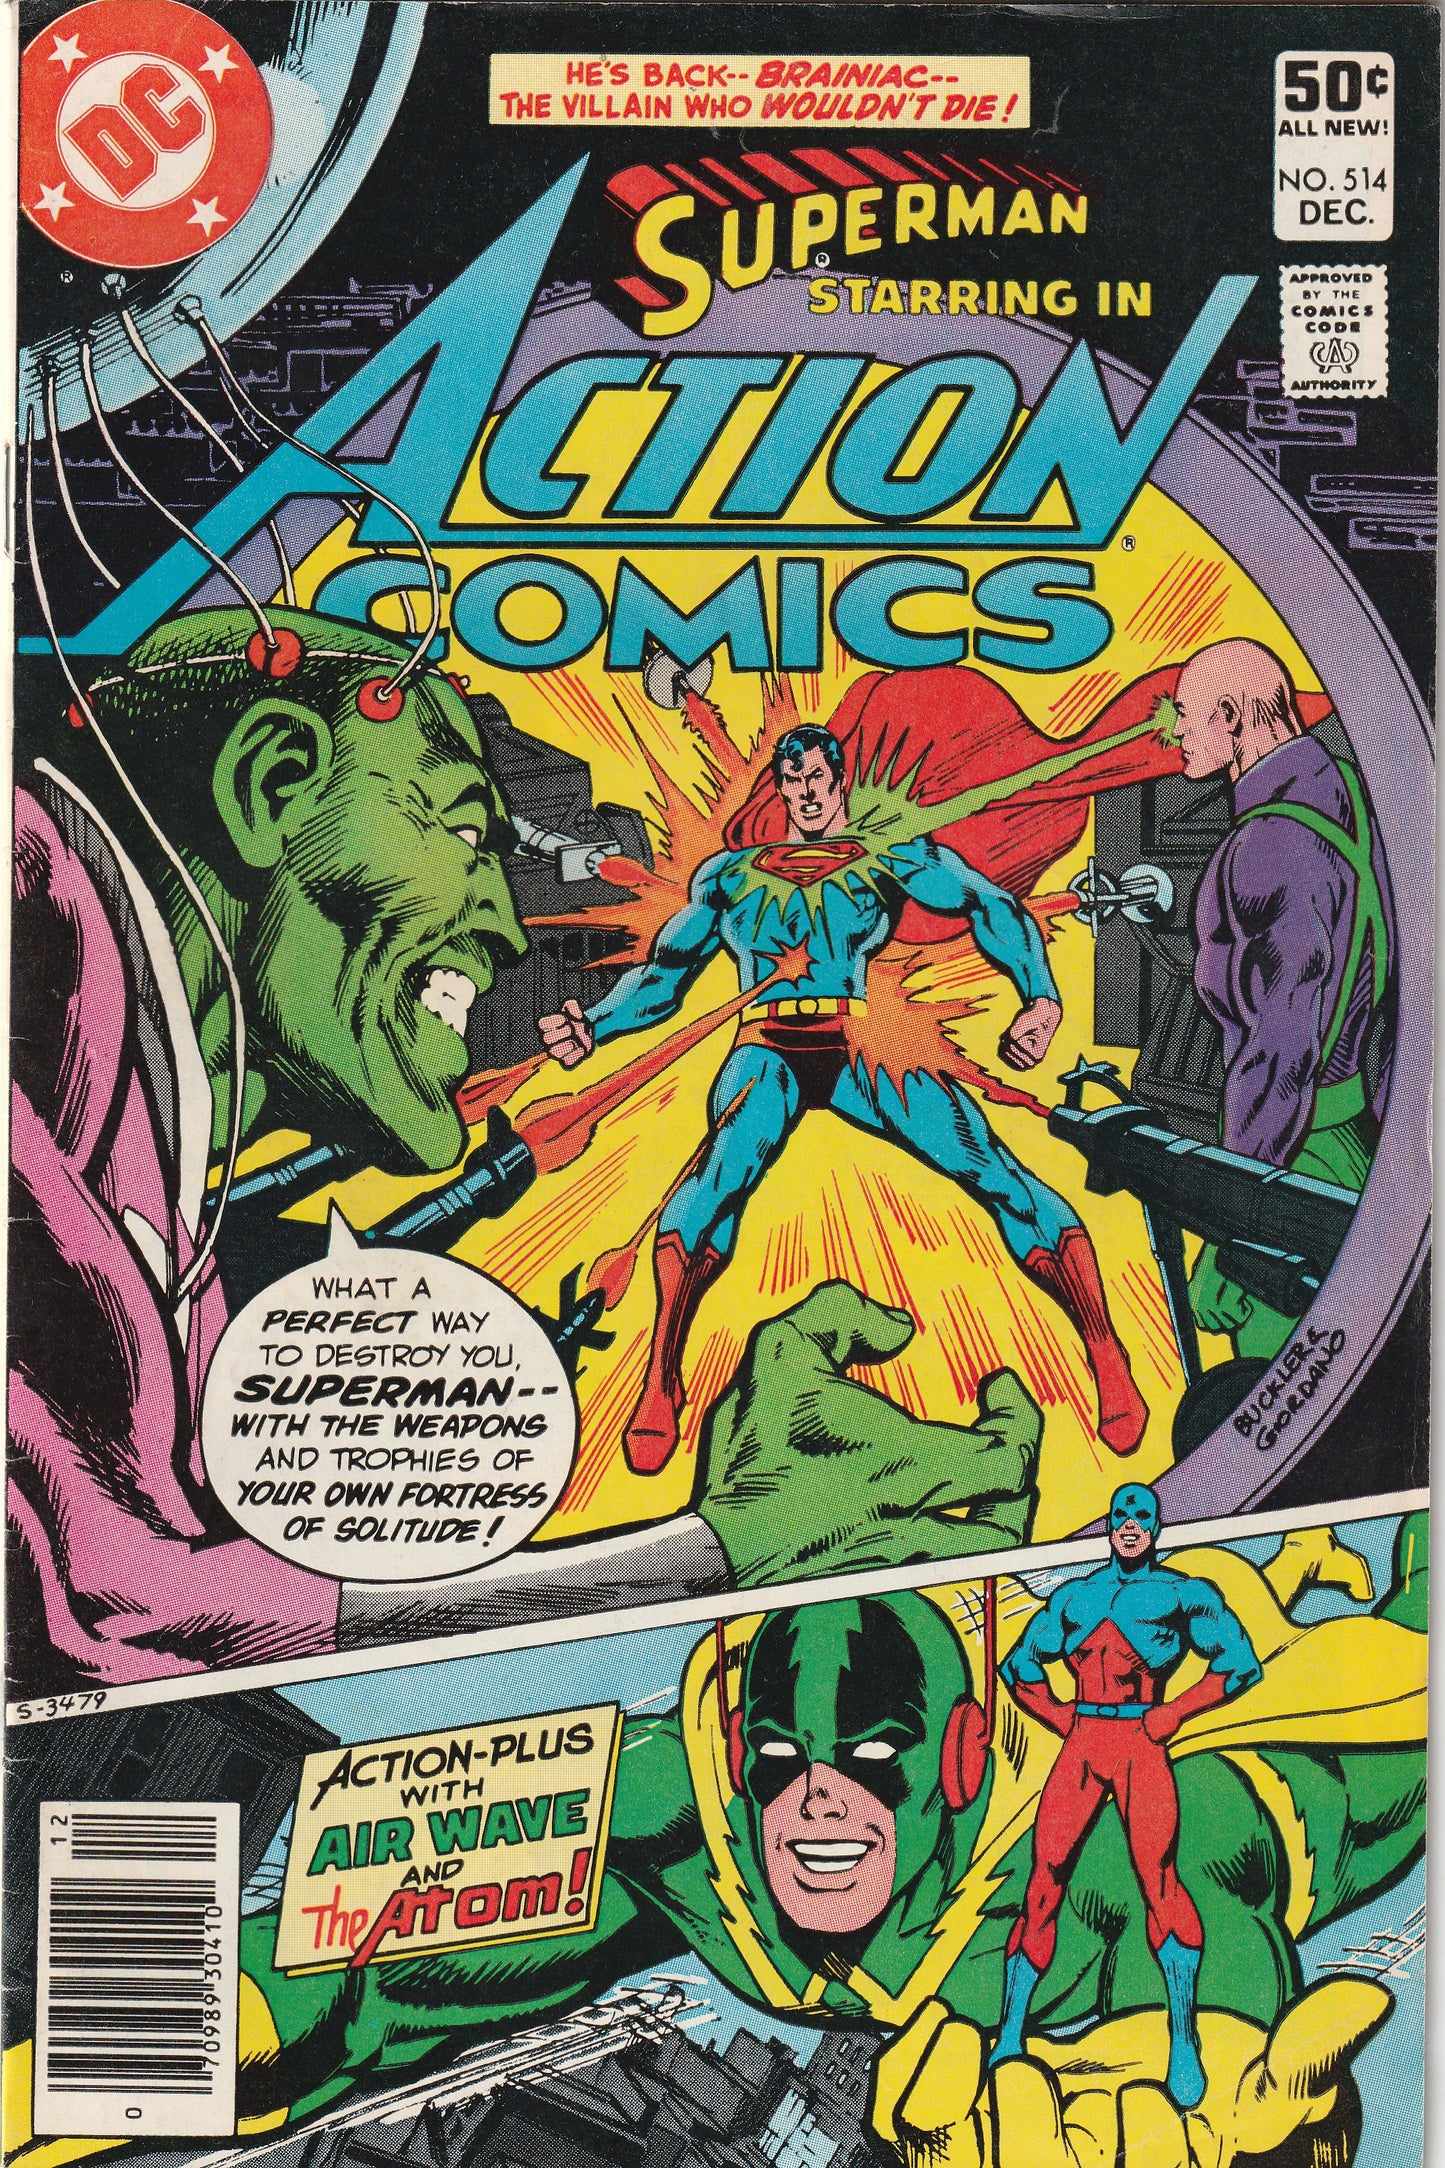 Action Comics #514 (1980)